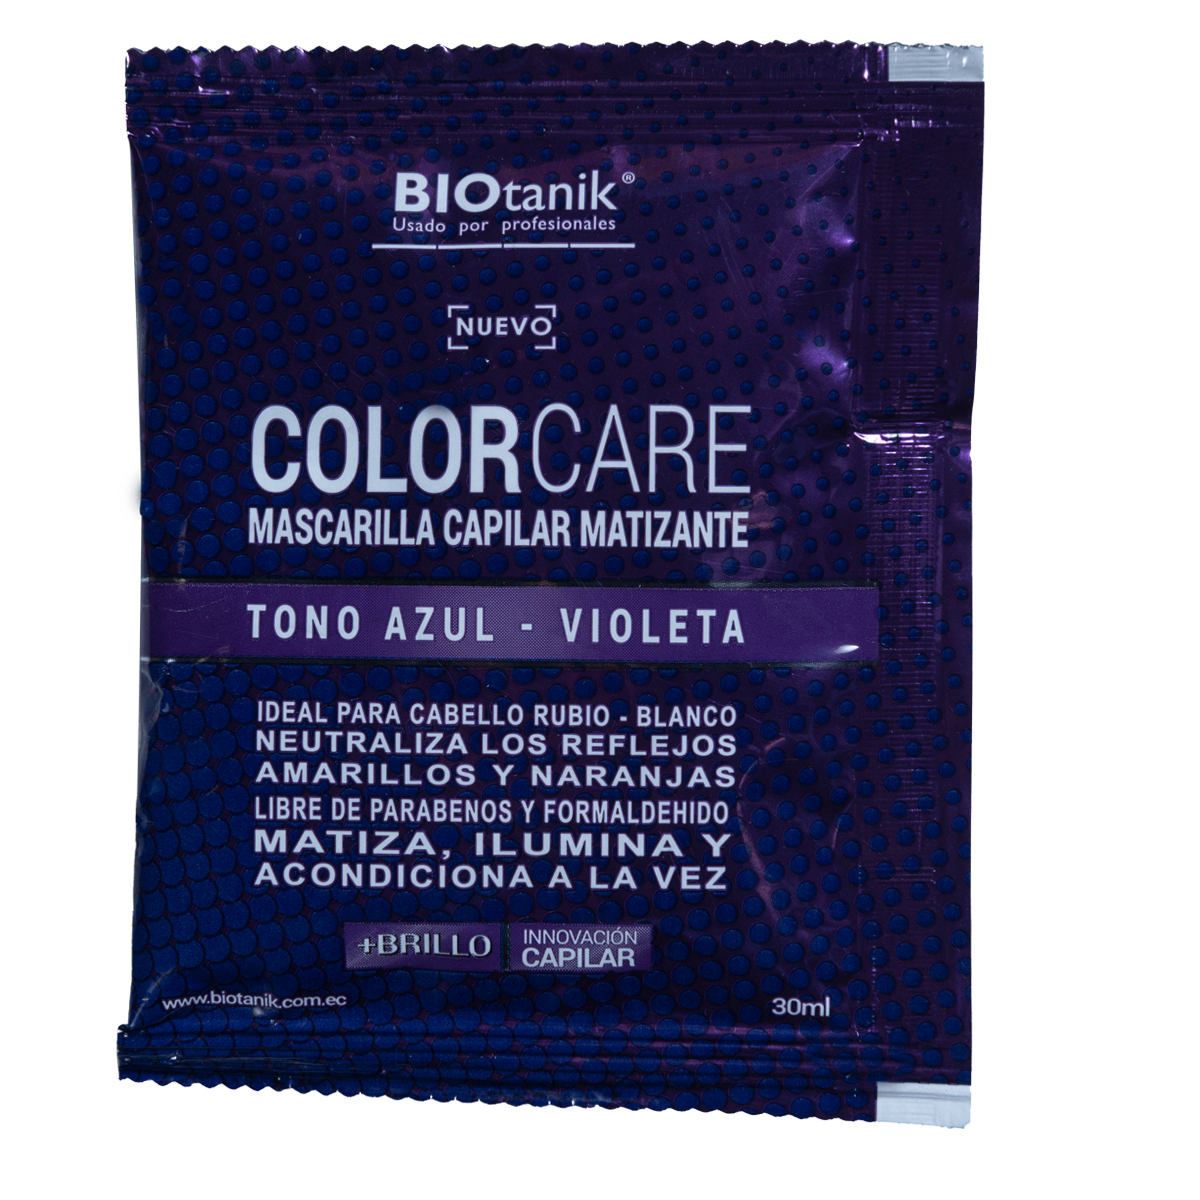 Mascarilla Capilar Matizante Biotanik® Color Sachet 30ml -